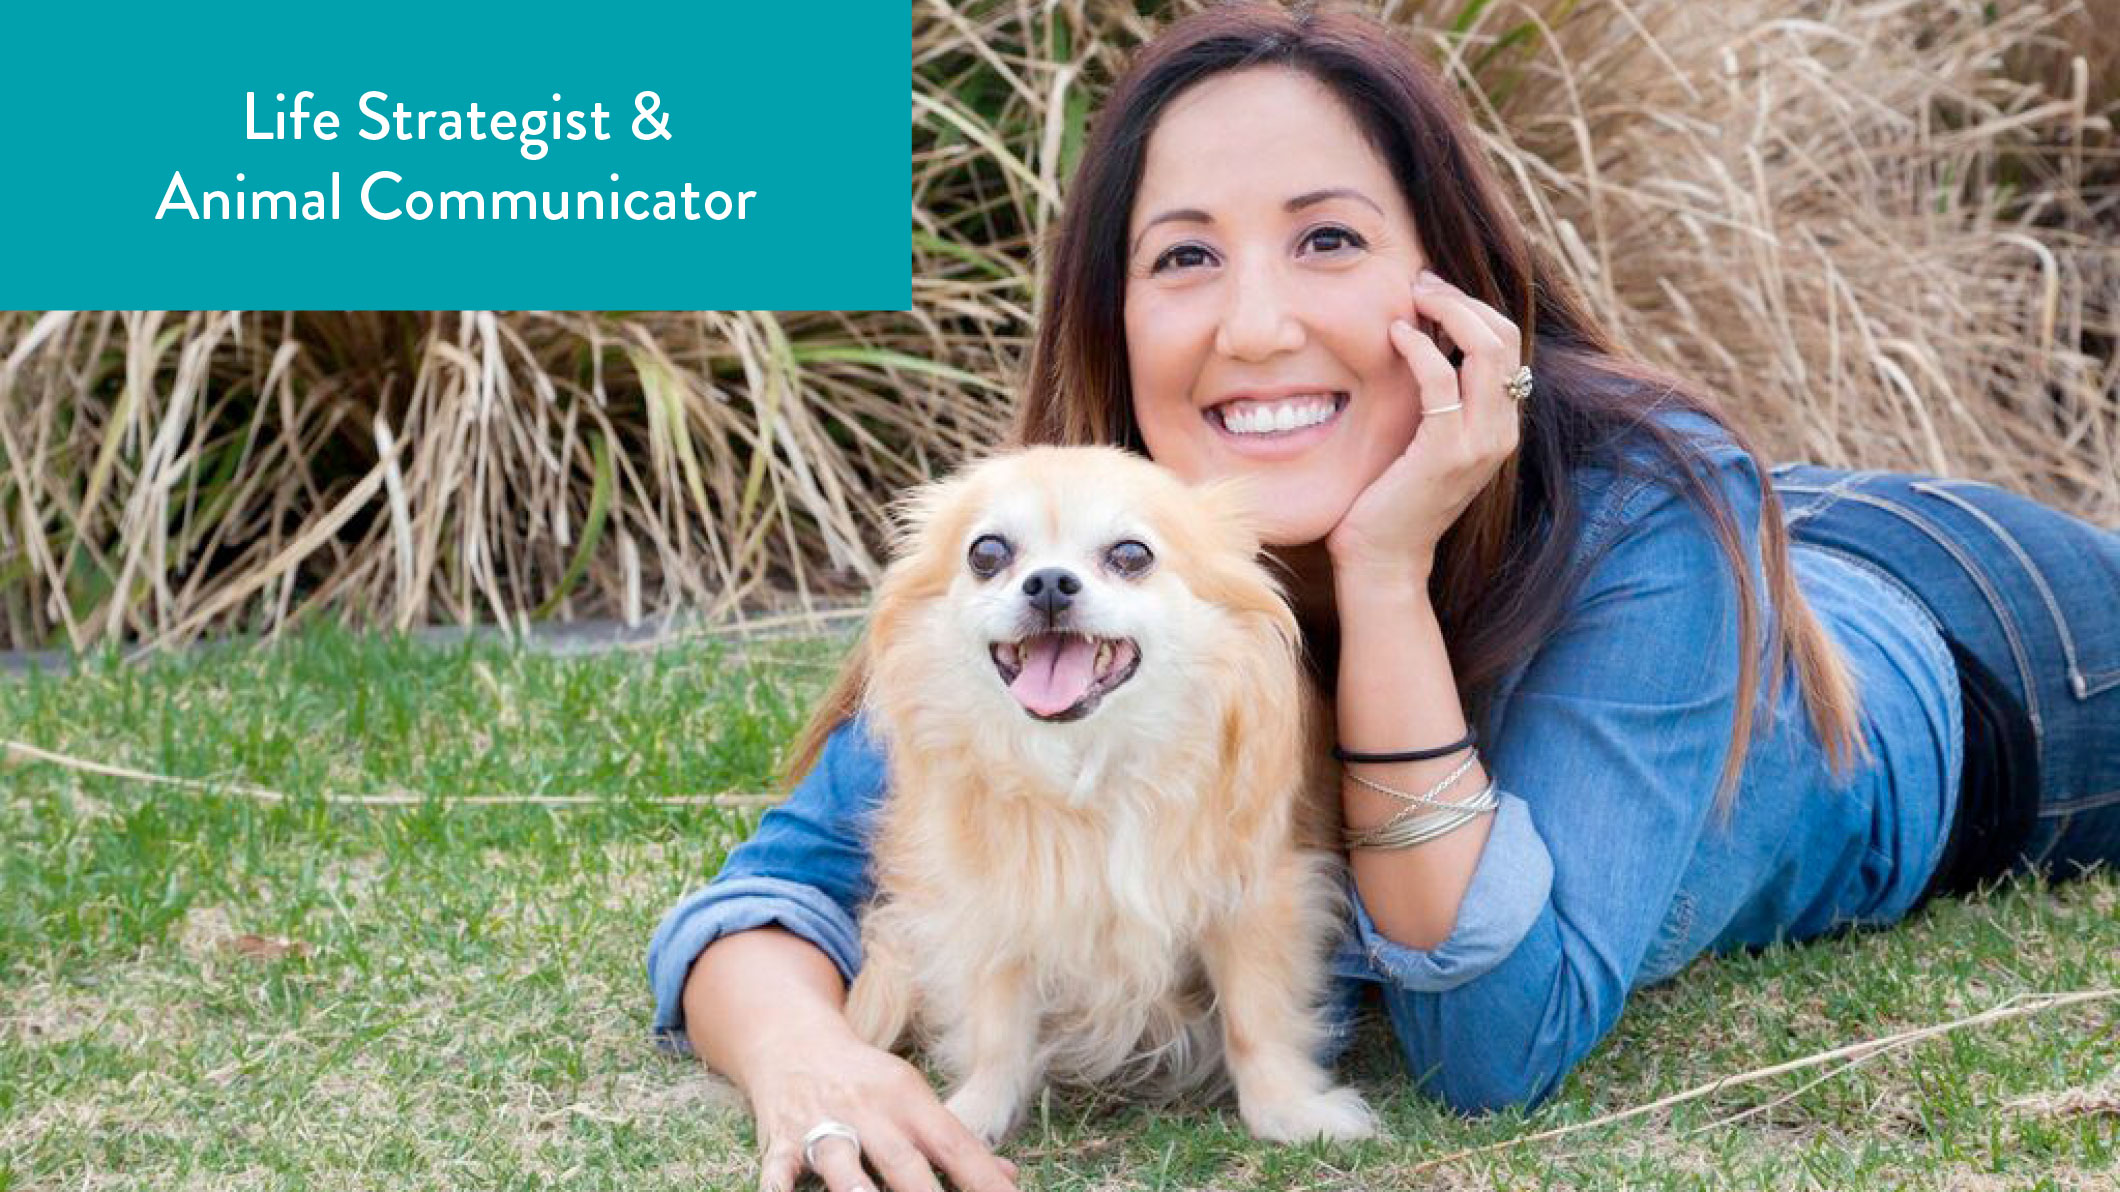 Simonne Lee – Founder of ‘The Animal Communication Method’